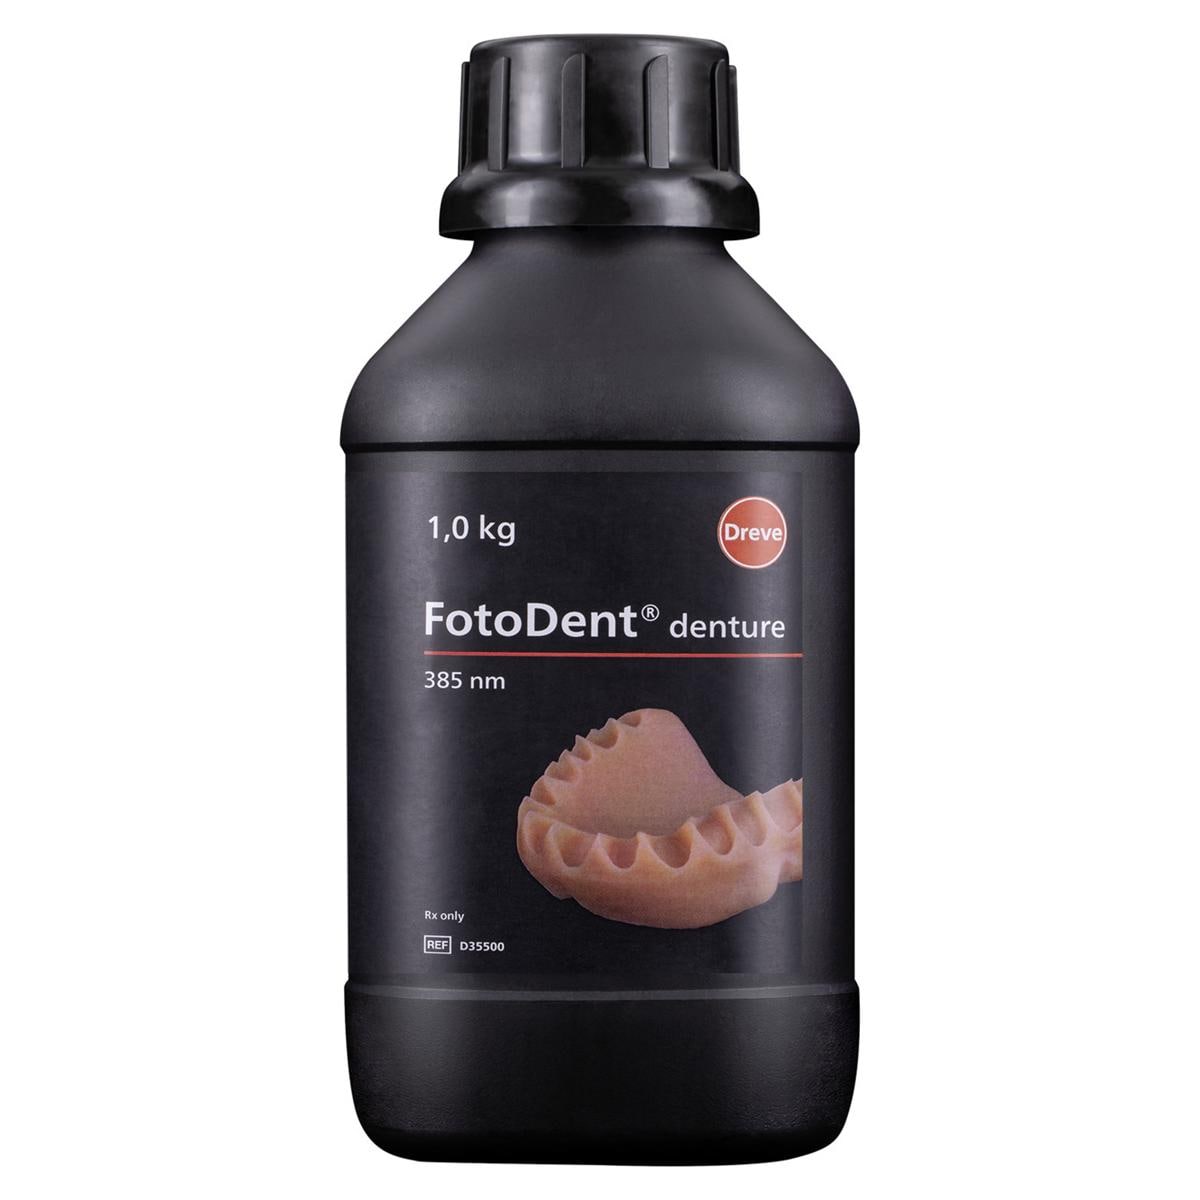 FotoDent® denture 385 nm - Rosa-transparent, Flasche 1.000 g